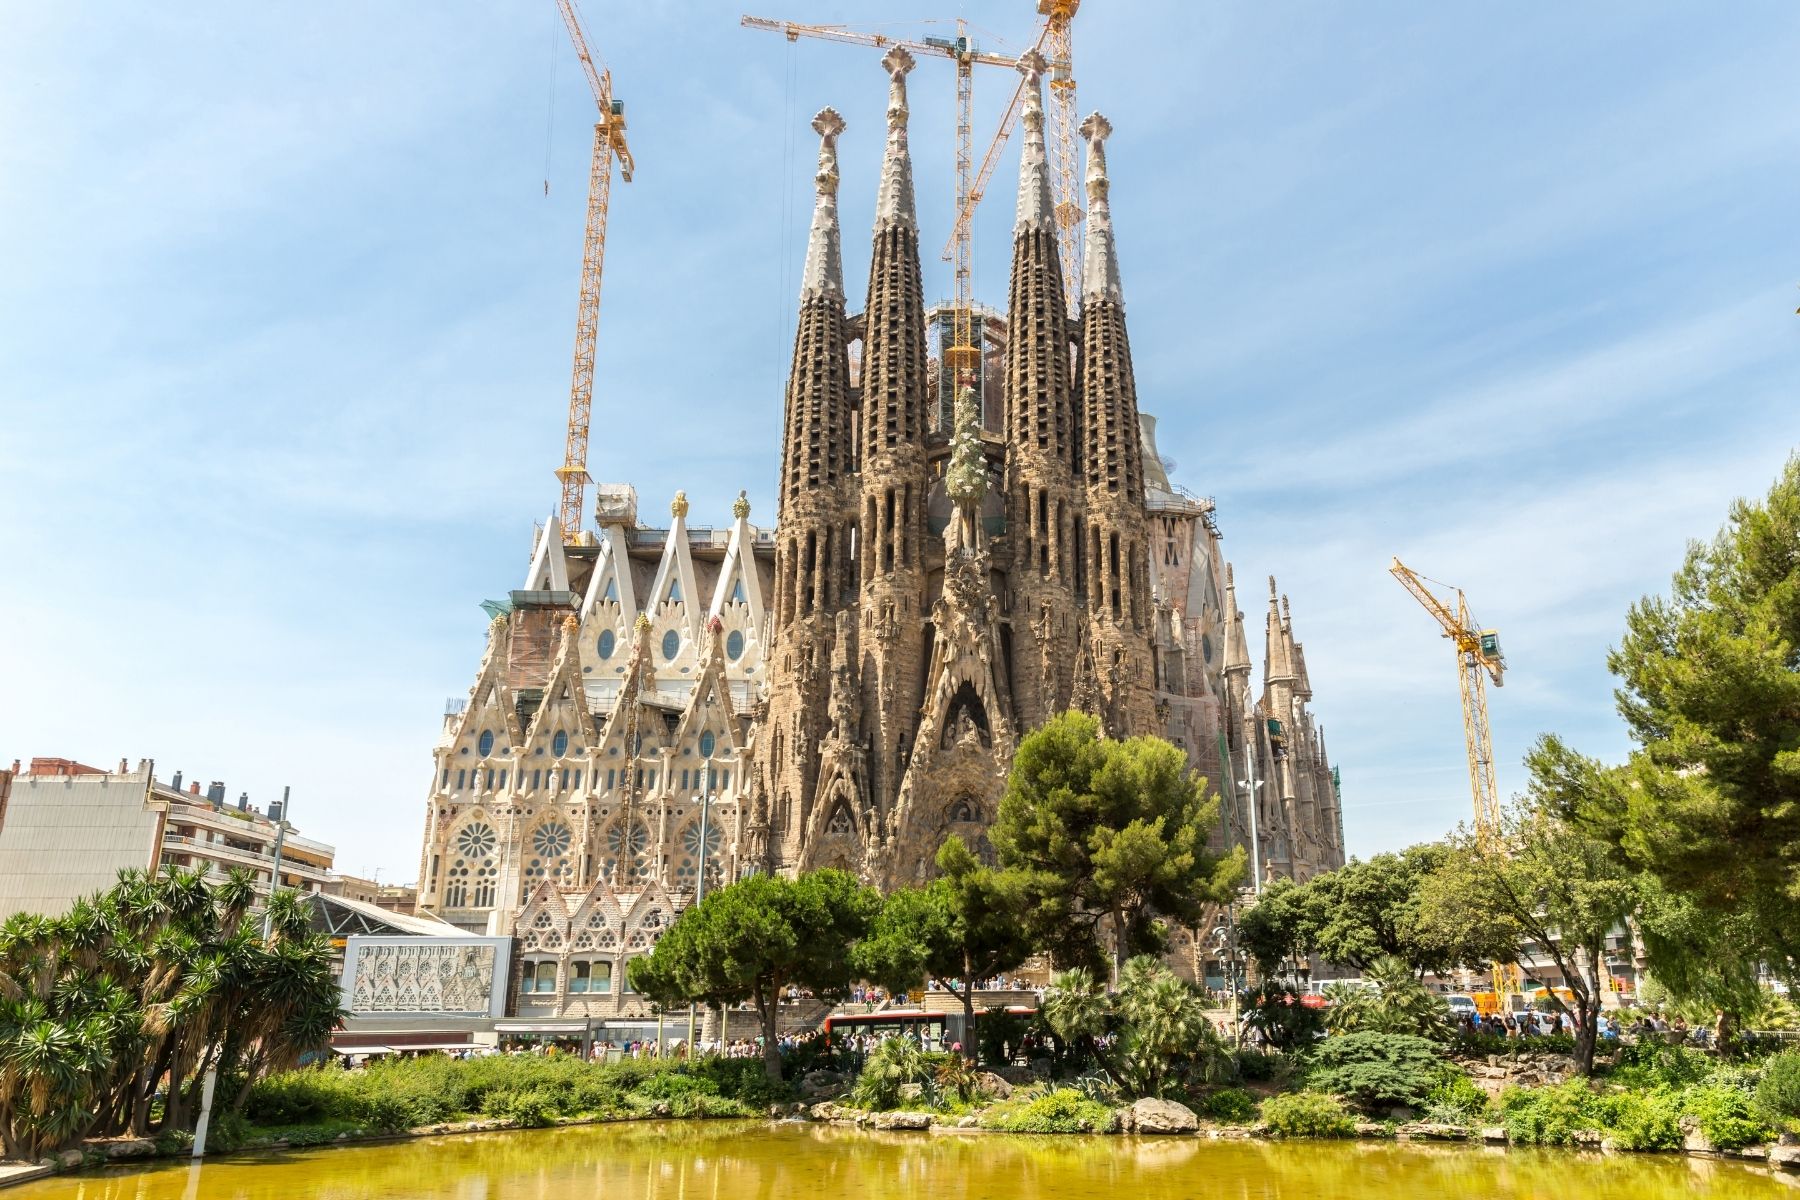 Sagrada Familia of Barcelona